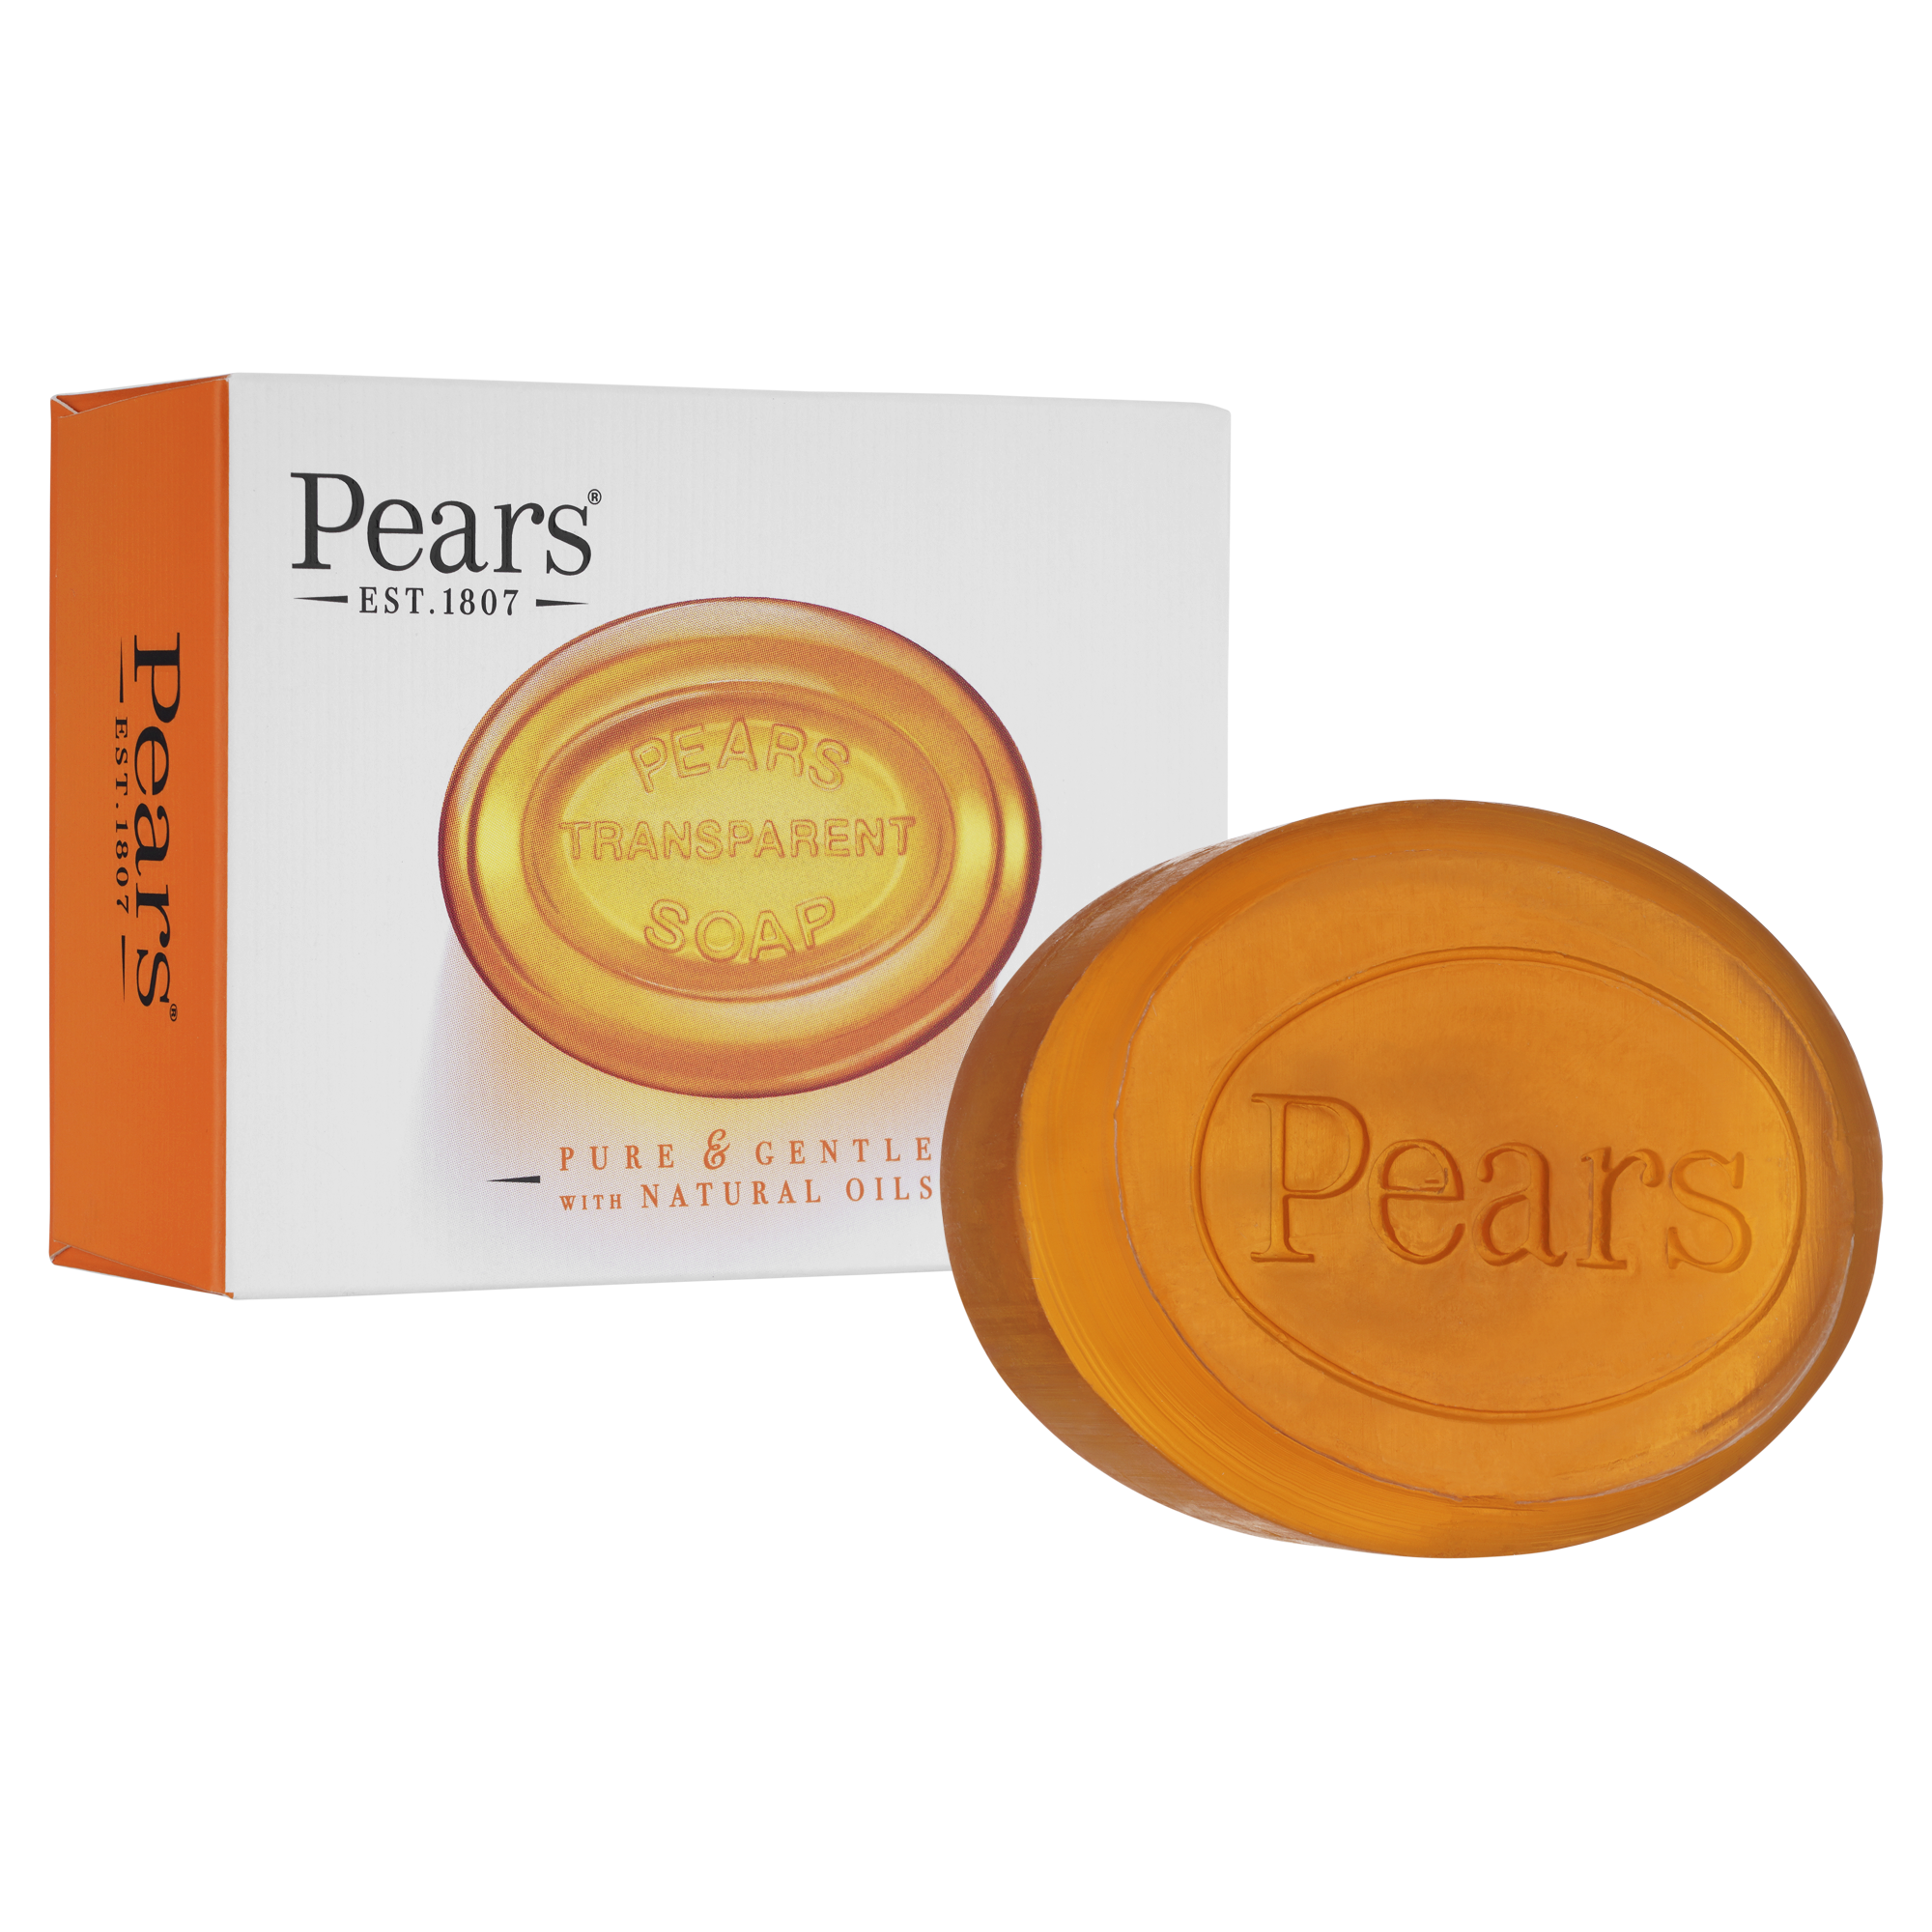 Pears Original Transparent Soap 100g